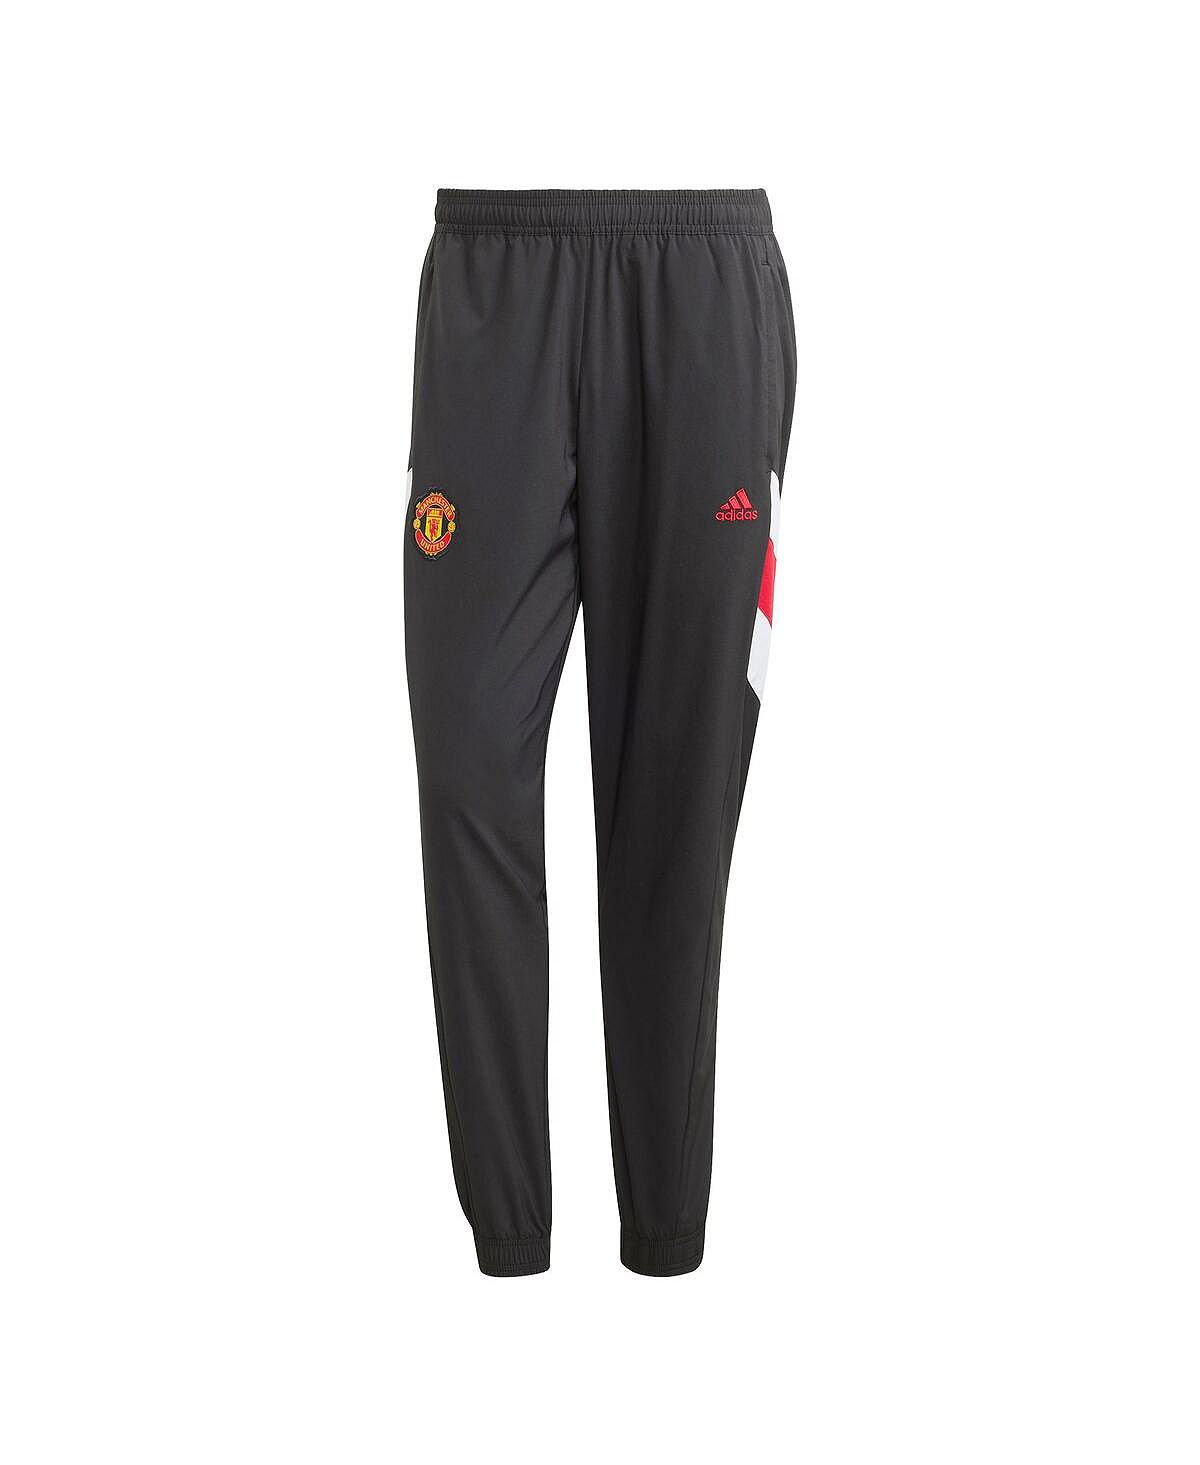 Мужские черные тренировочные брюки Manchester United Football Icon adidas 2021 2022 new manchester football jersey top quality fast send united